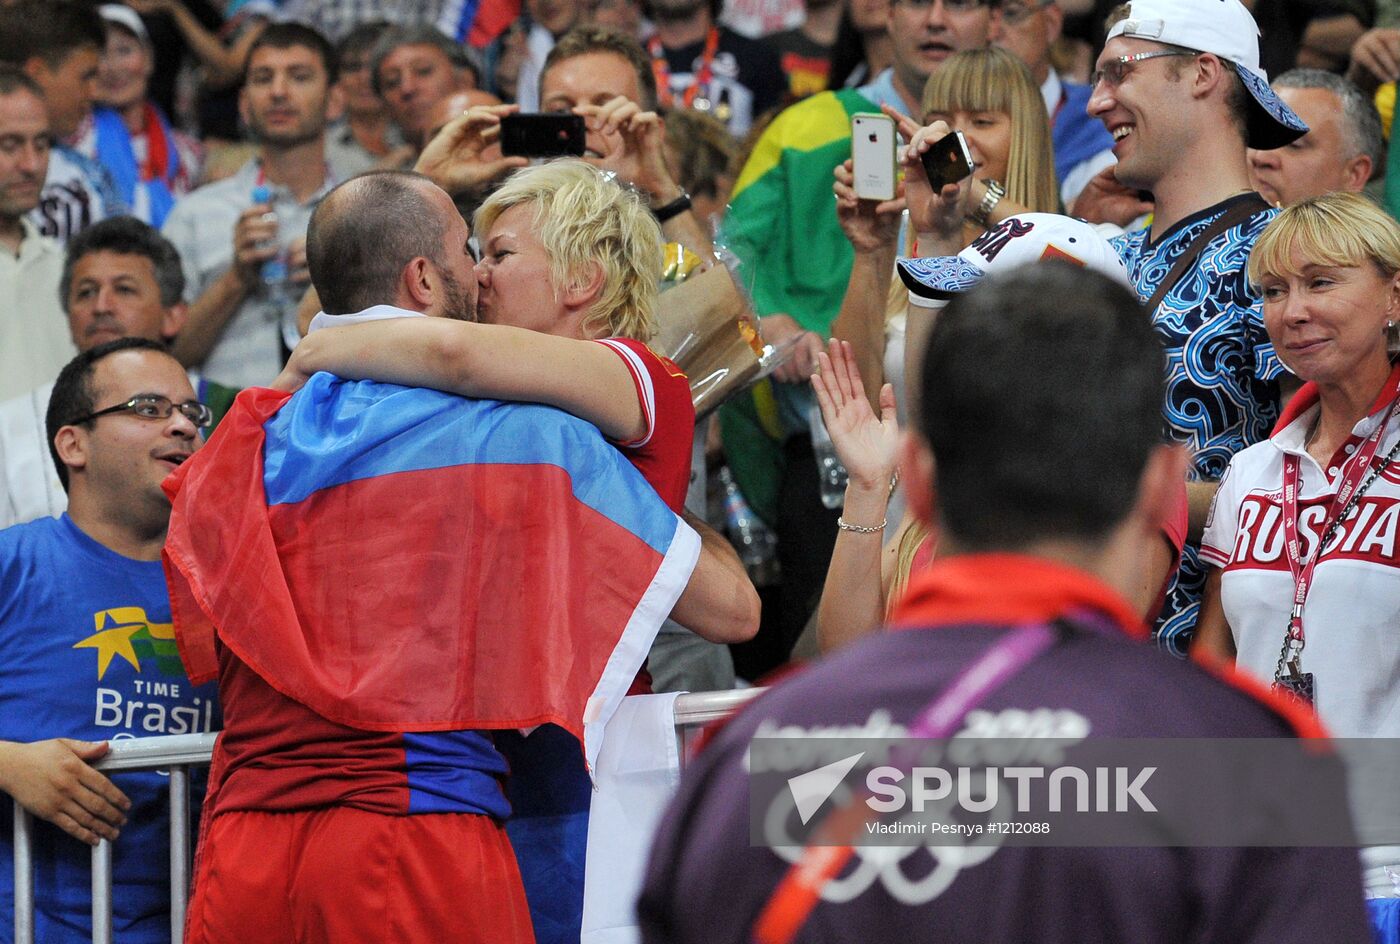 2012 Olympics. Volleyball. Russia vs. Brazil